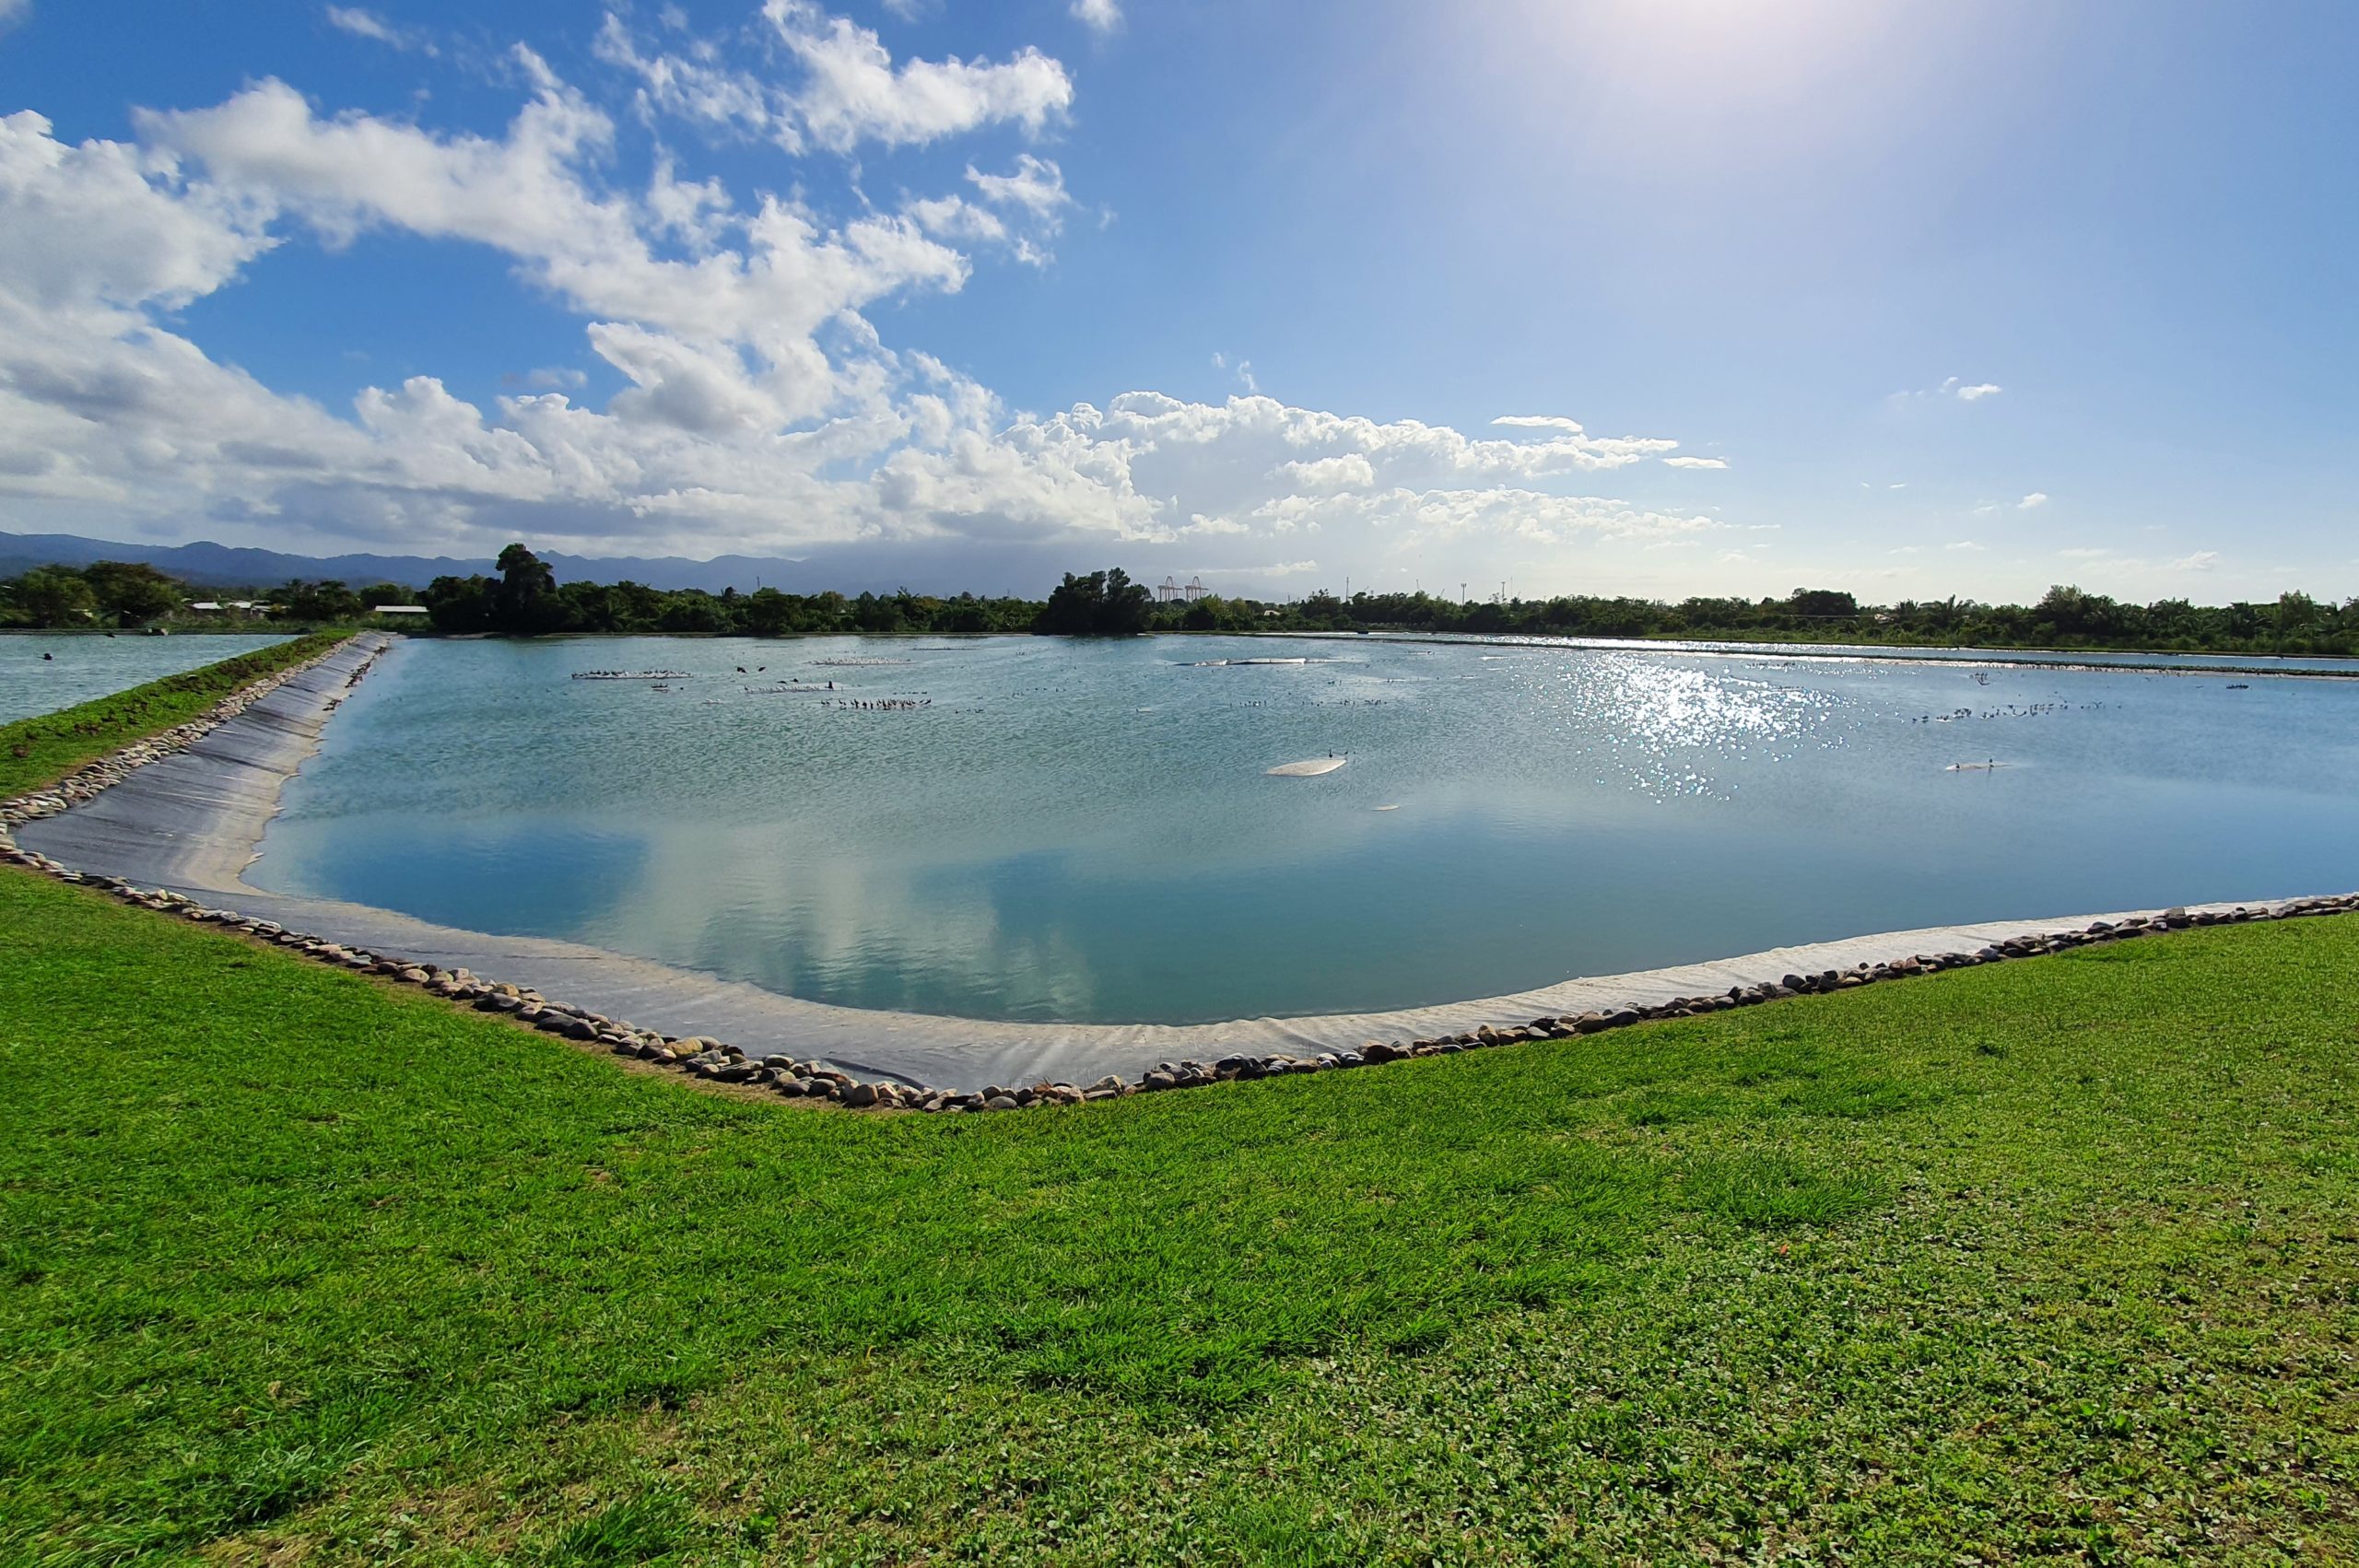 A man-made pond under a blue and sunny sky